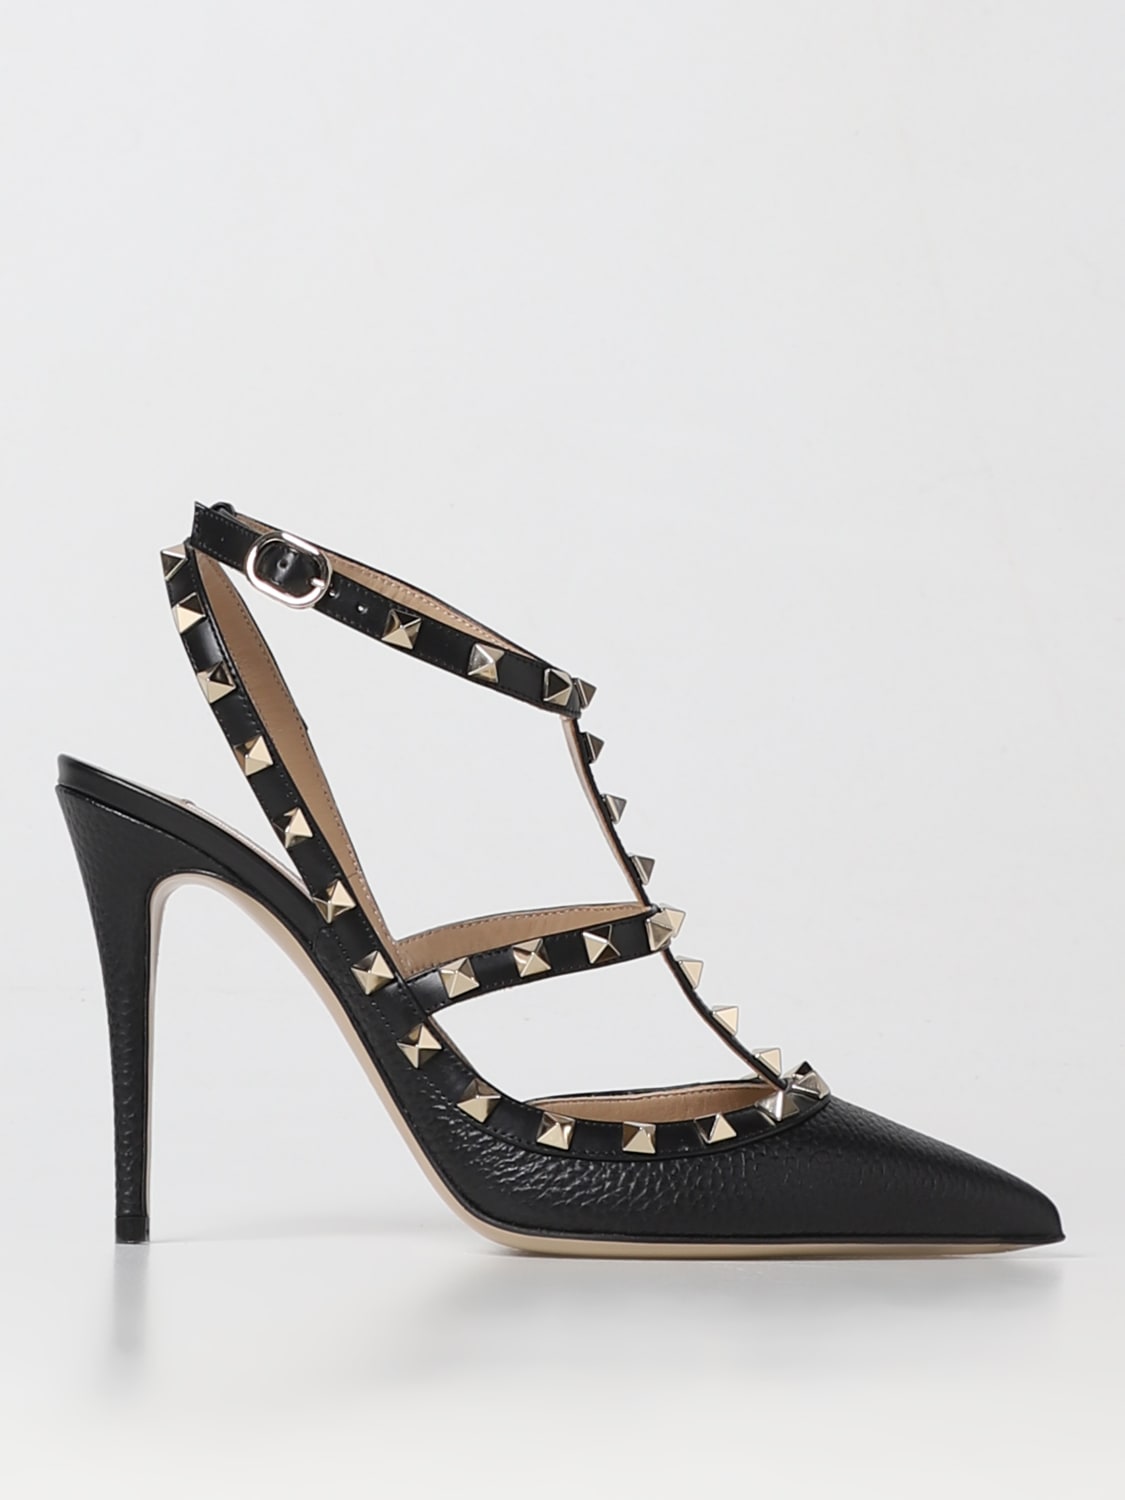 VALENTINO GARAVANI: in grained leather - Black | Valentino high heel shoes 3W2S0393VCE online at GIGLIO.COM